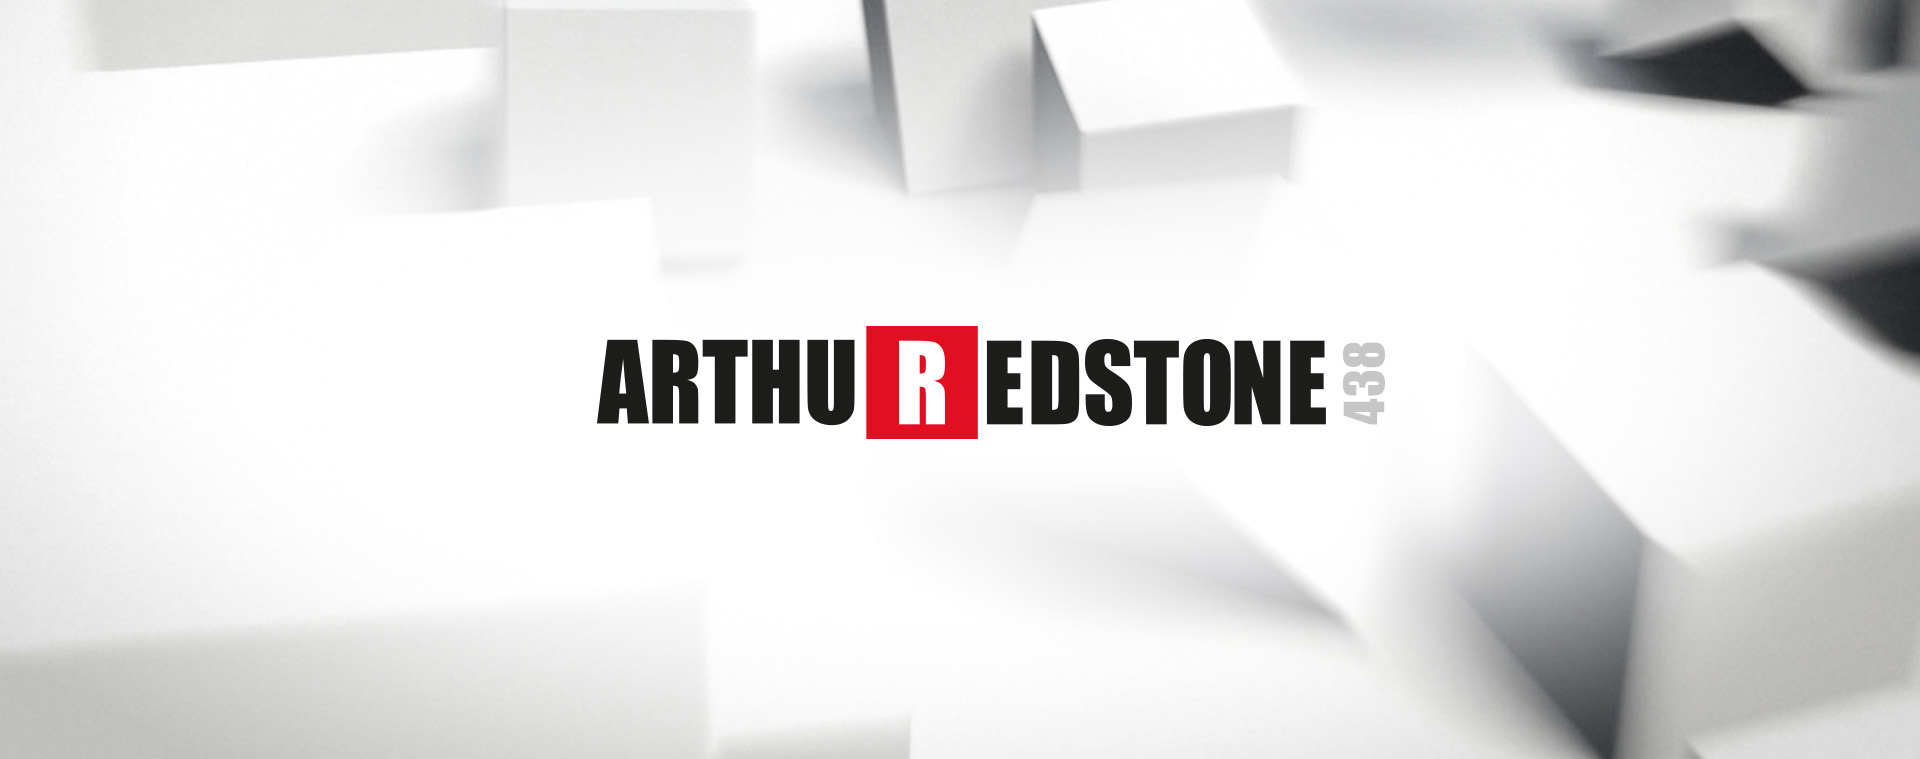 ArthuRedstone438